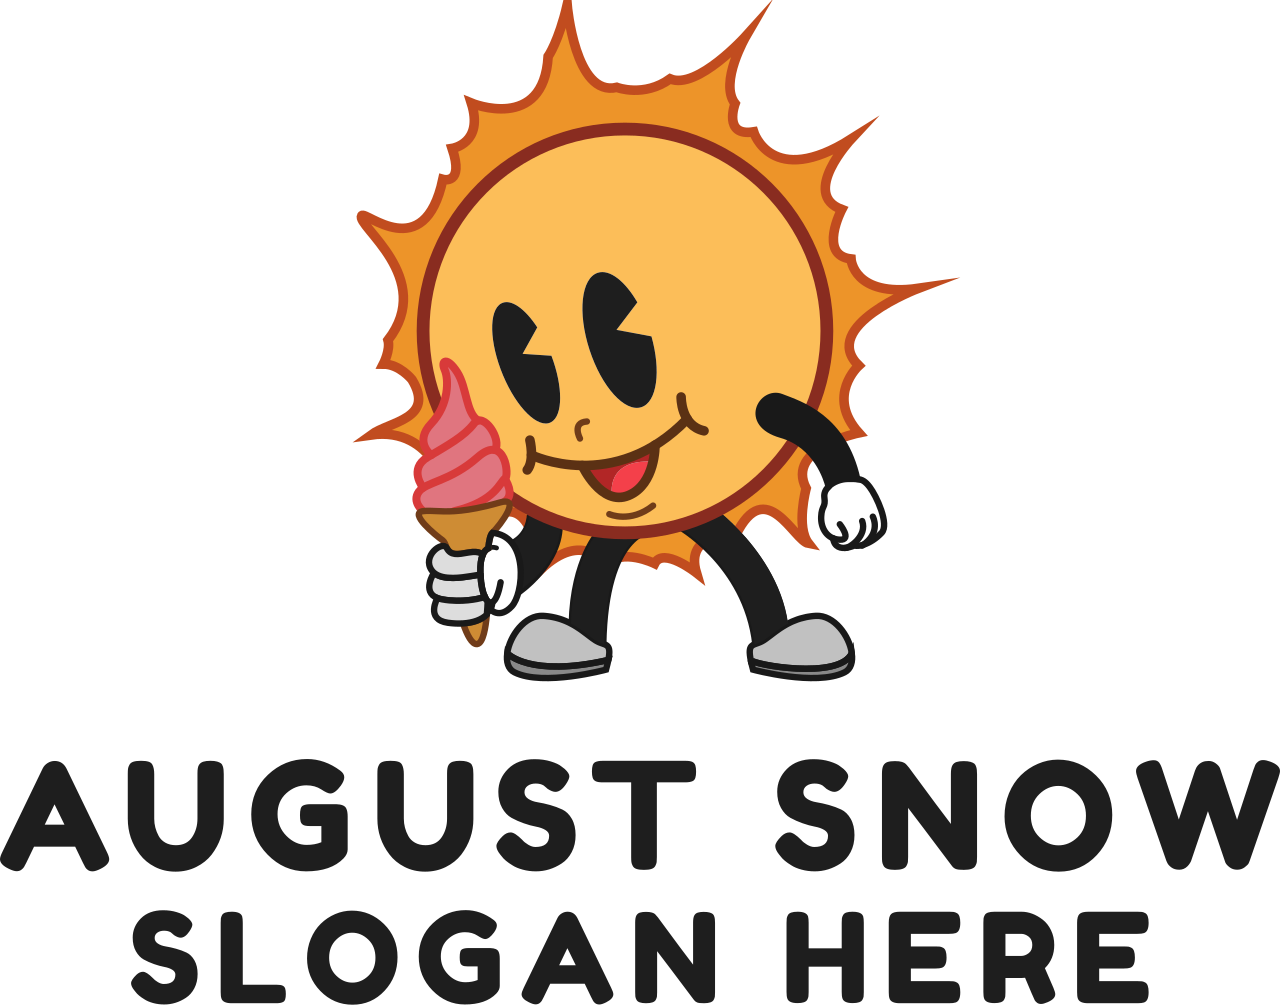 August snow's logo